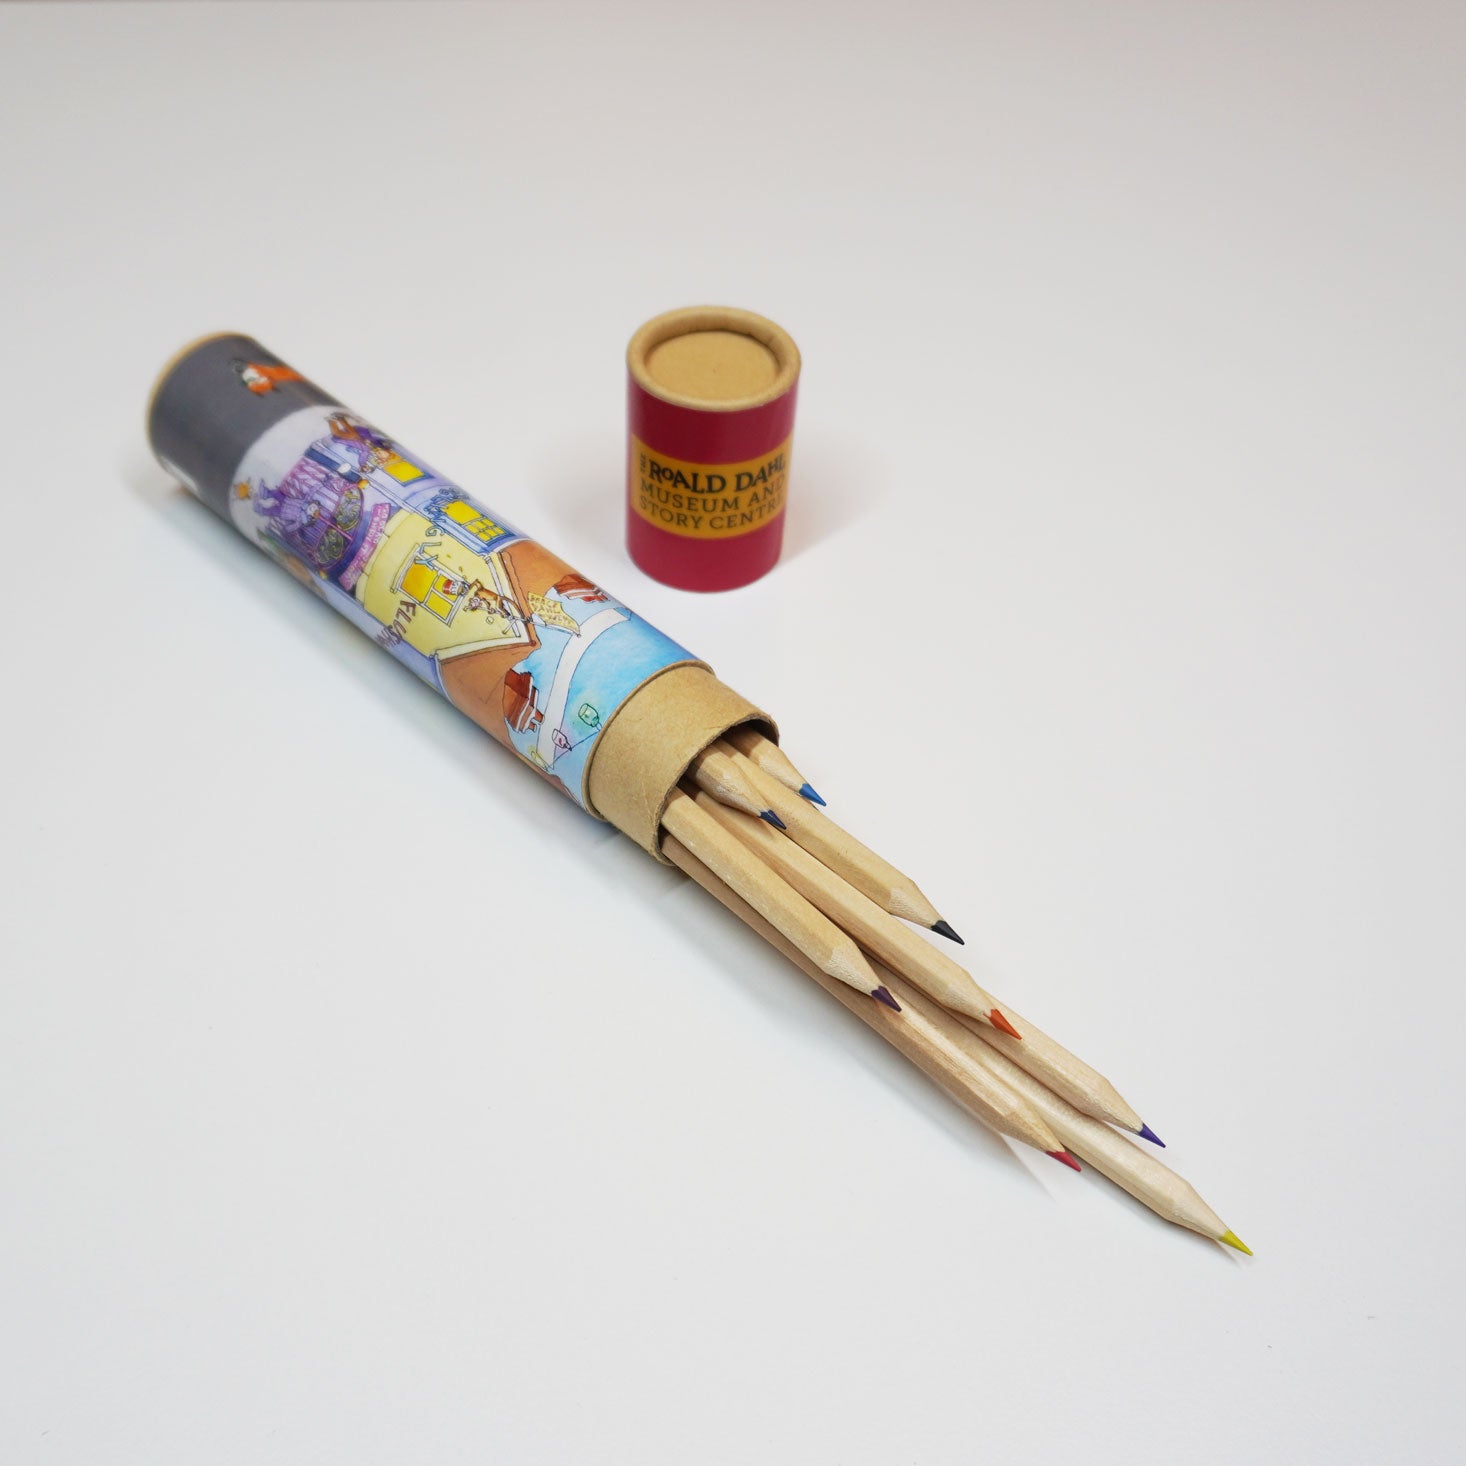 Roald Dahl Museum colouring pencils set